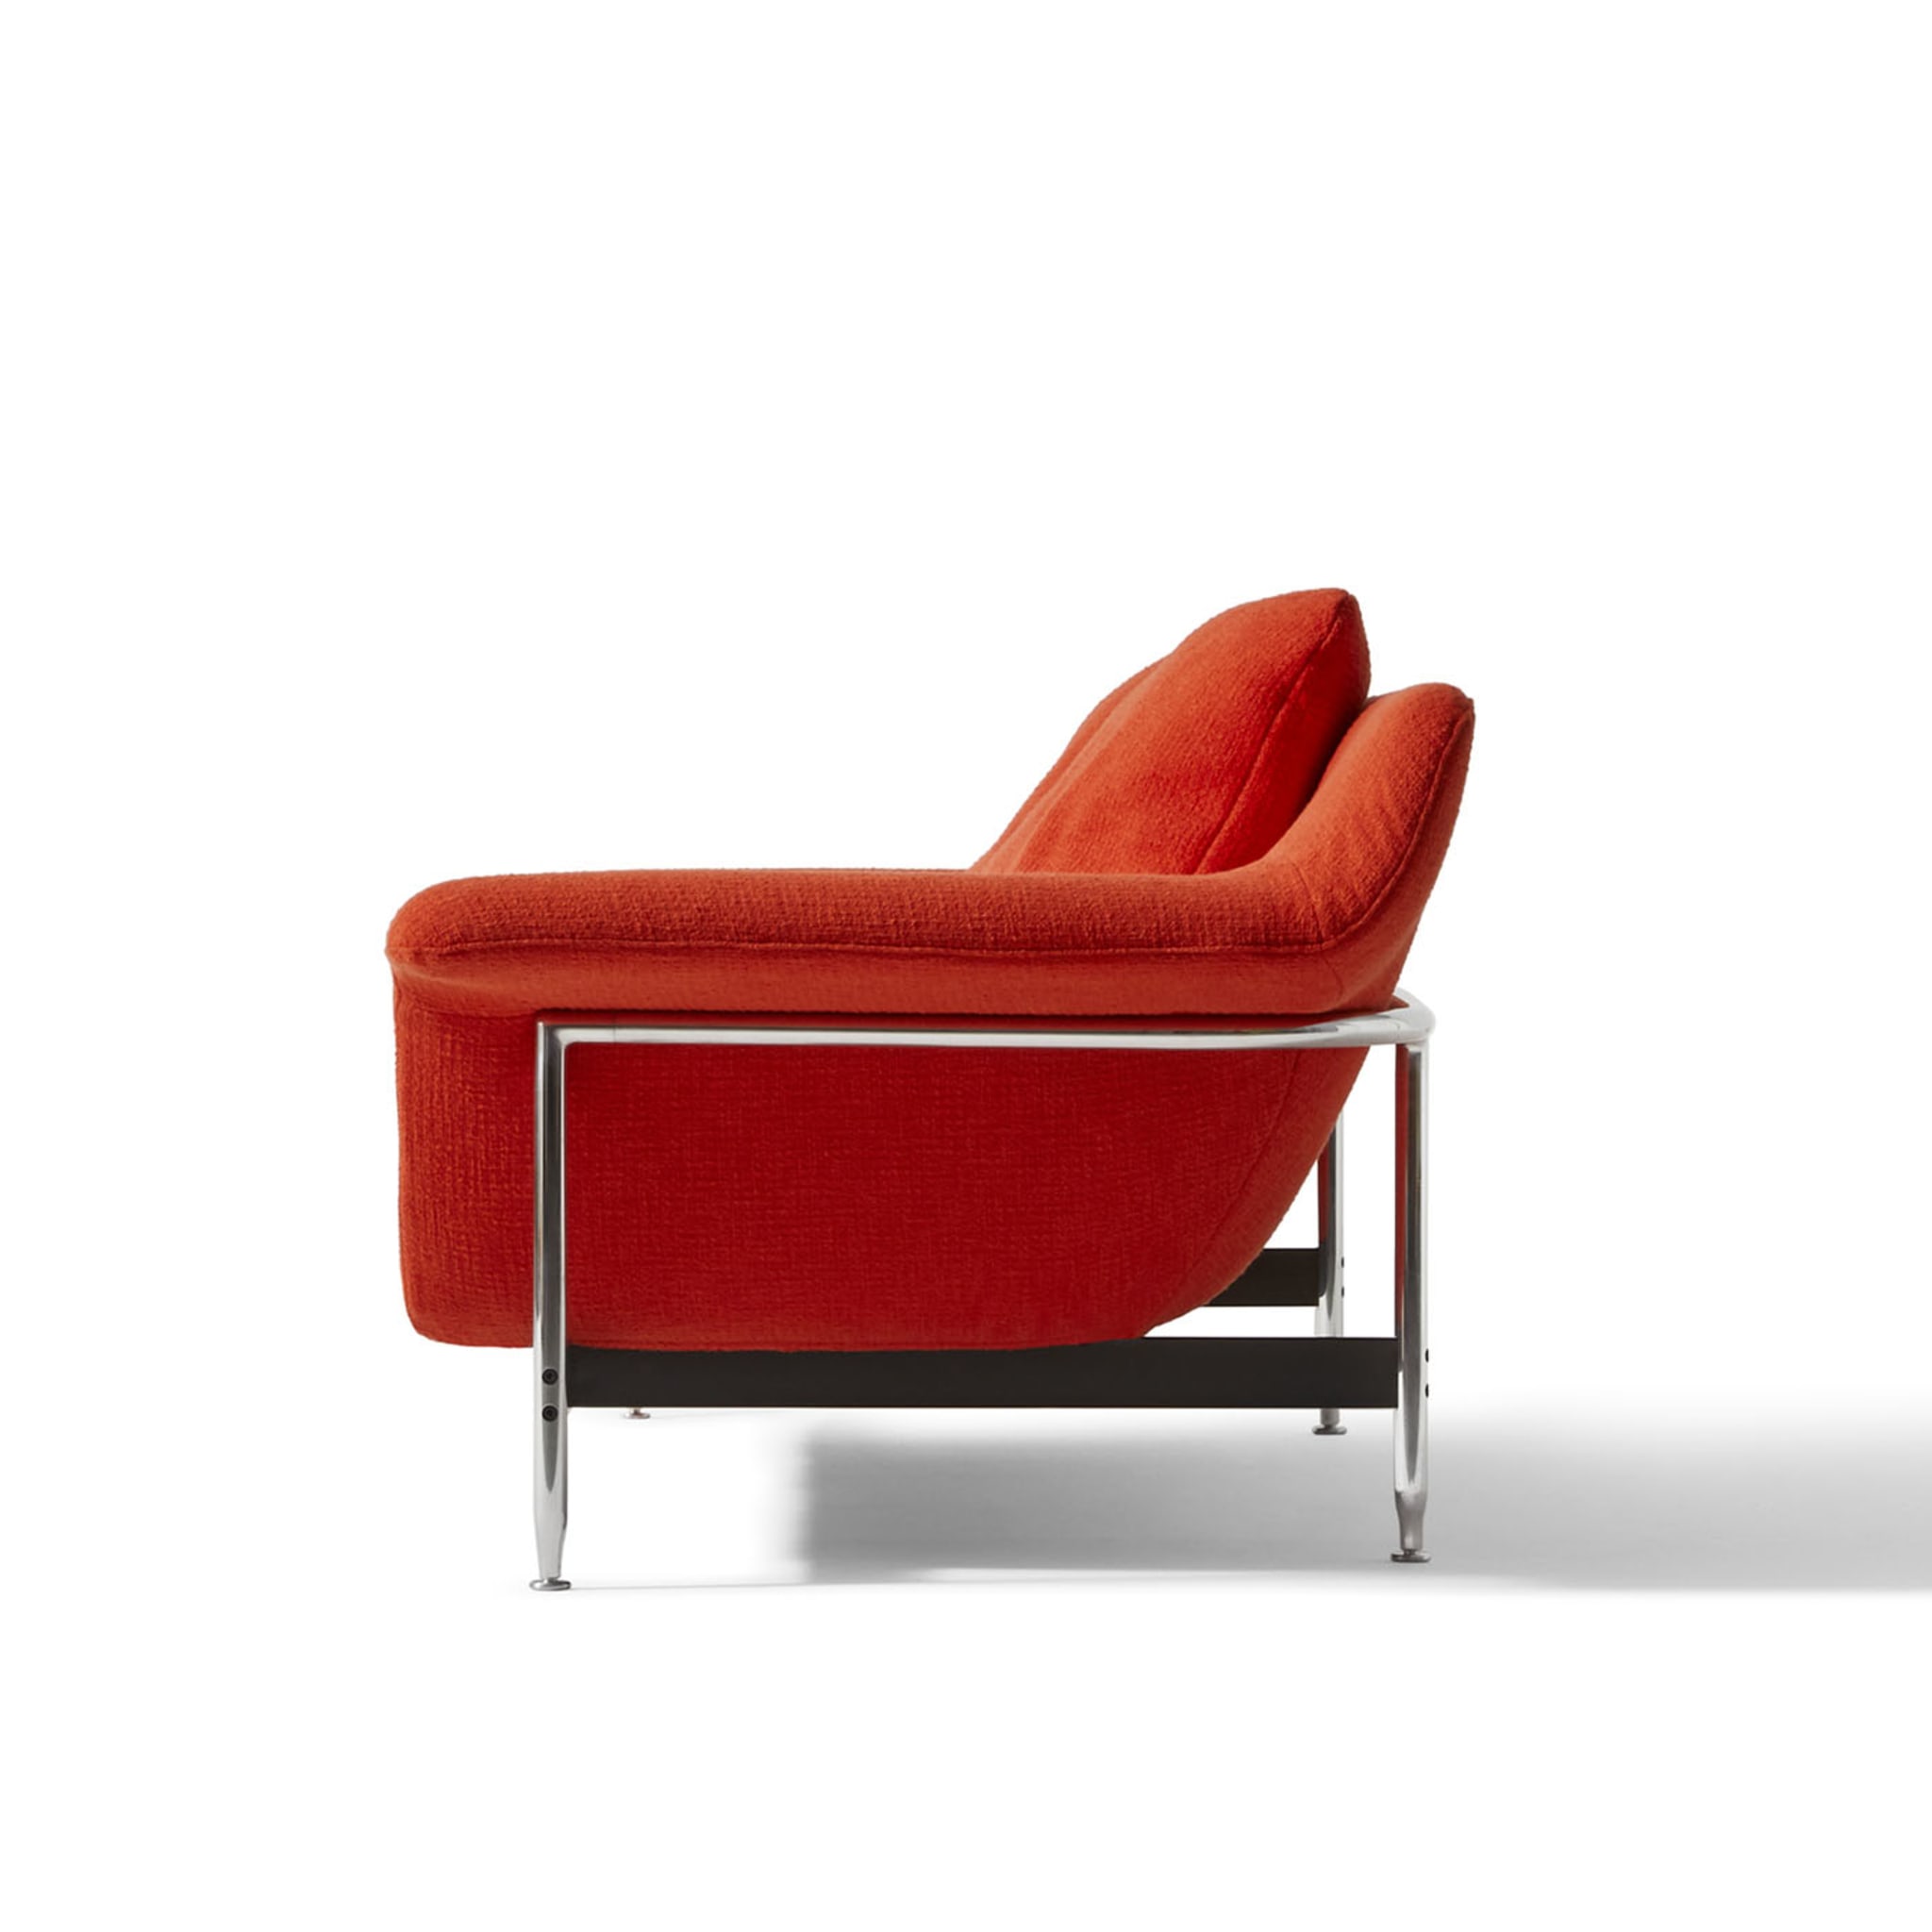 Esosoft 3-Seater Orange Sofa by Antonio Citterio - Alternative view 3